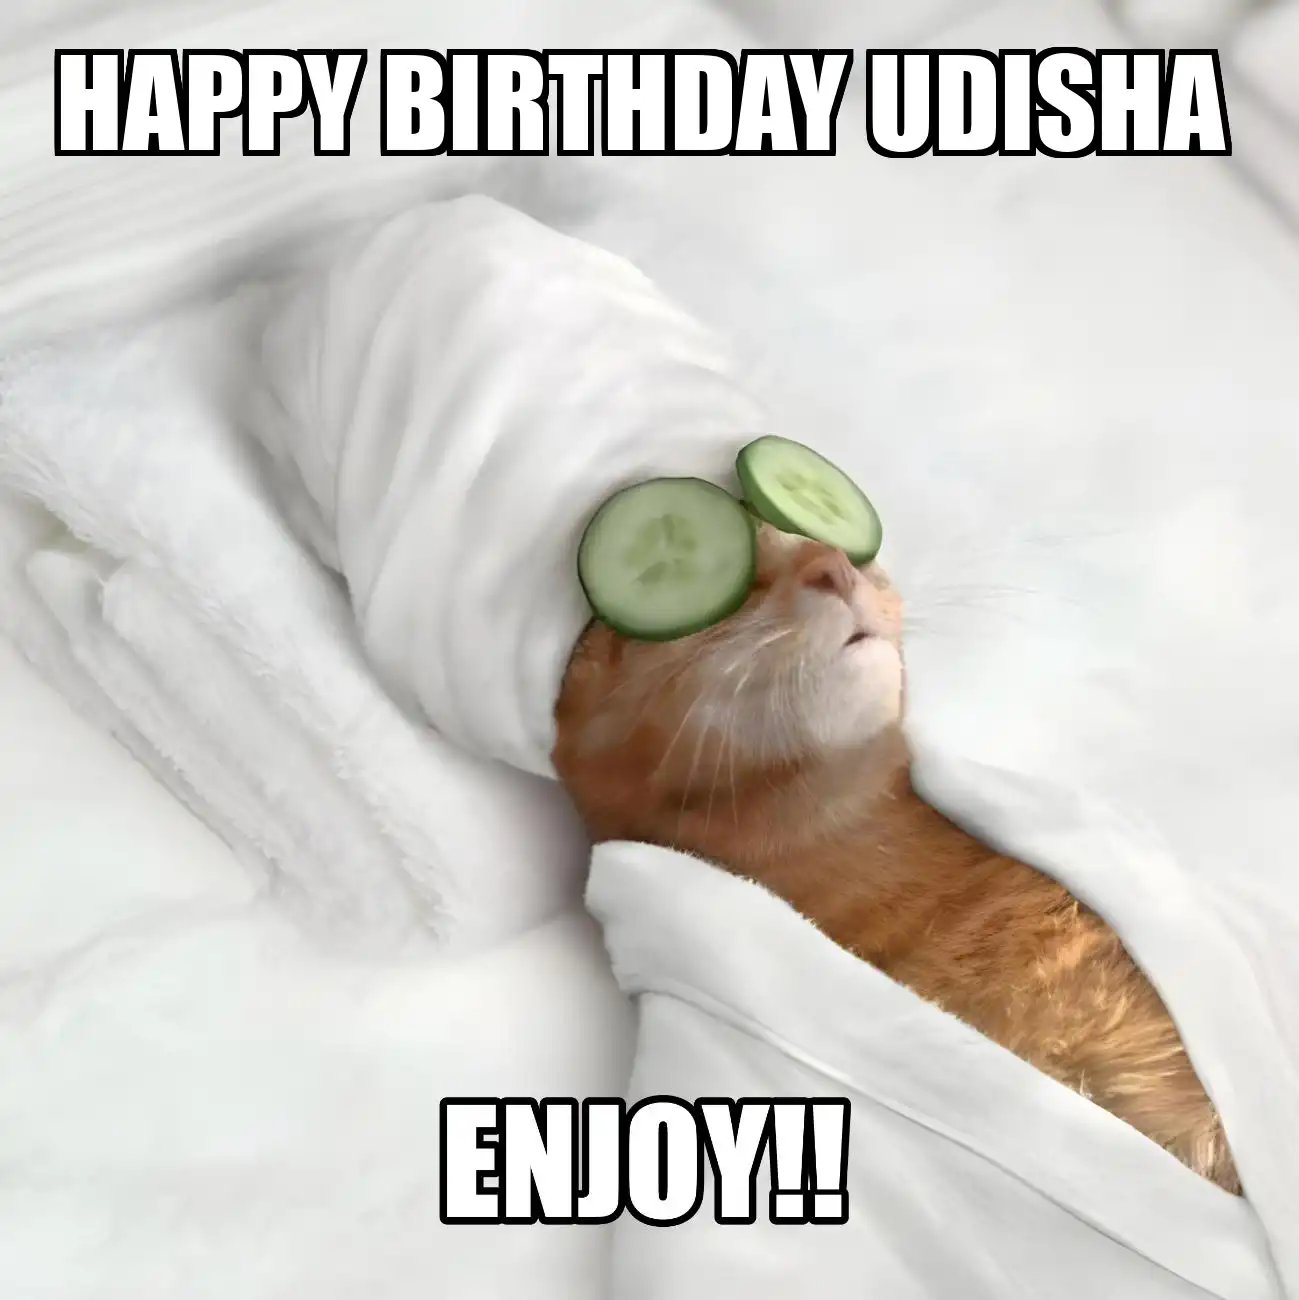 Happy Birthday Udisha Enjoy Cat Meme